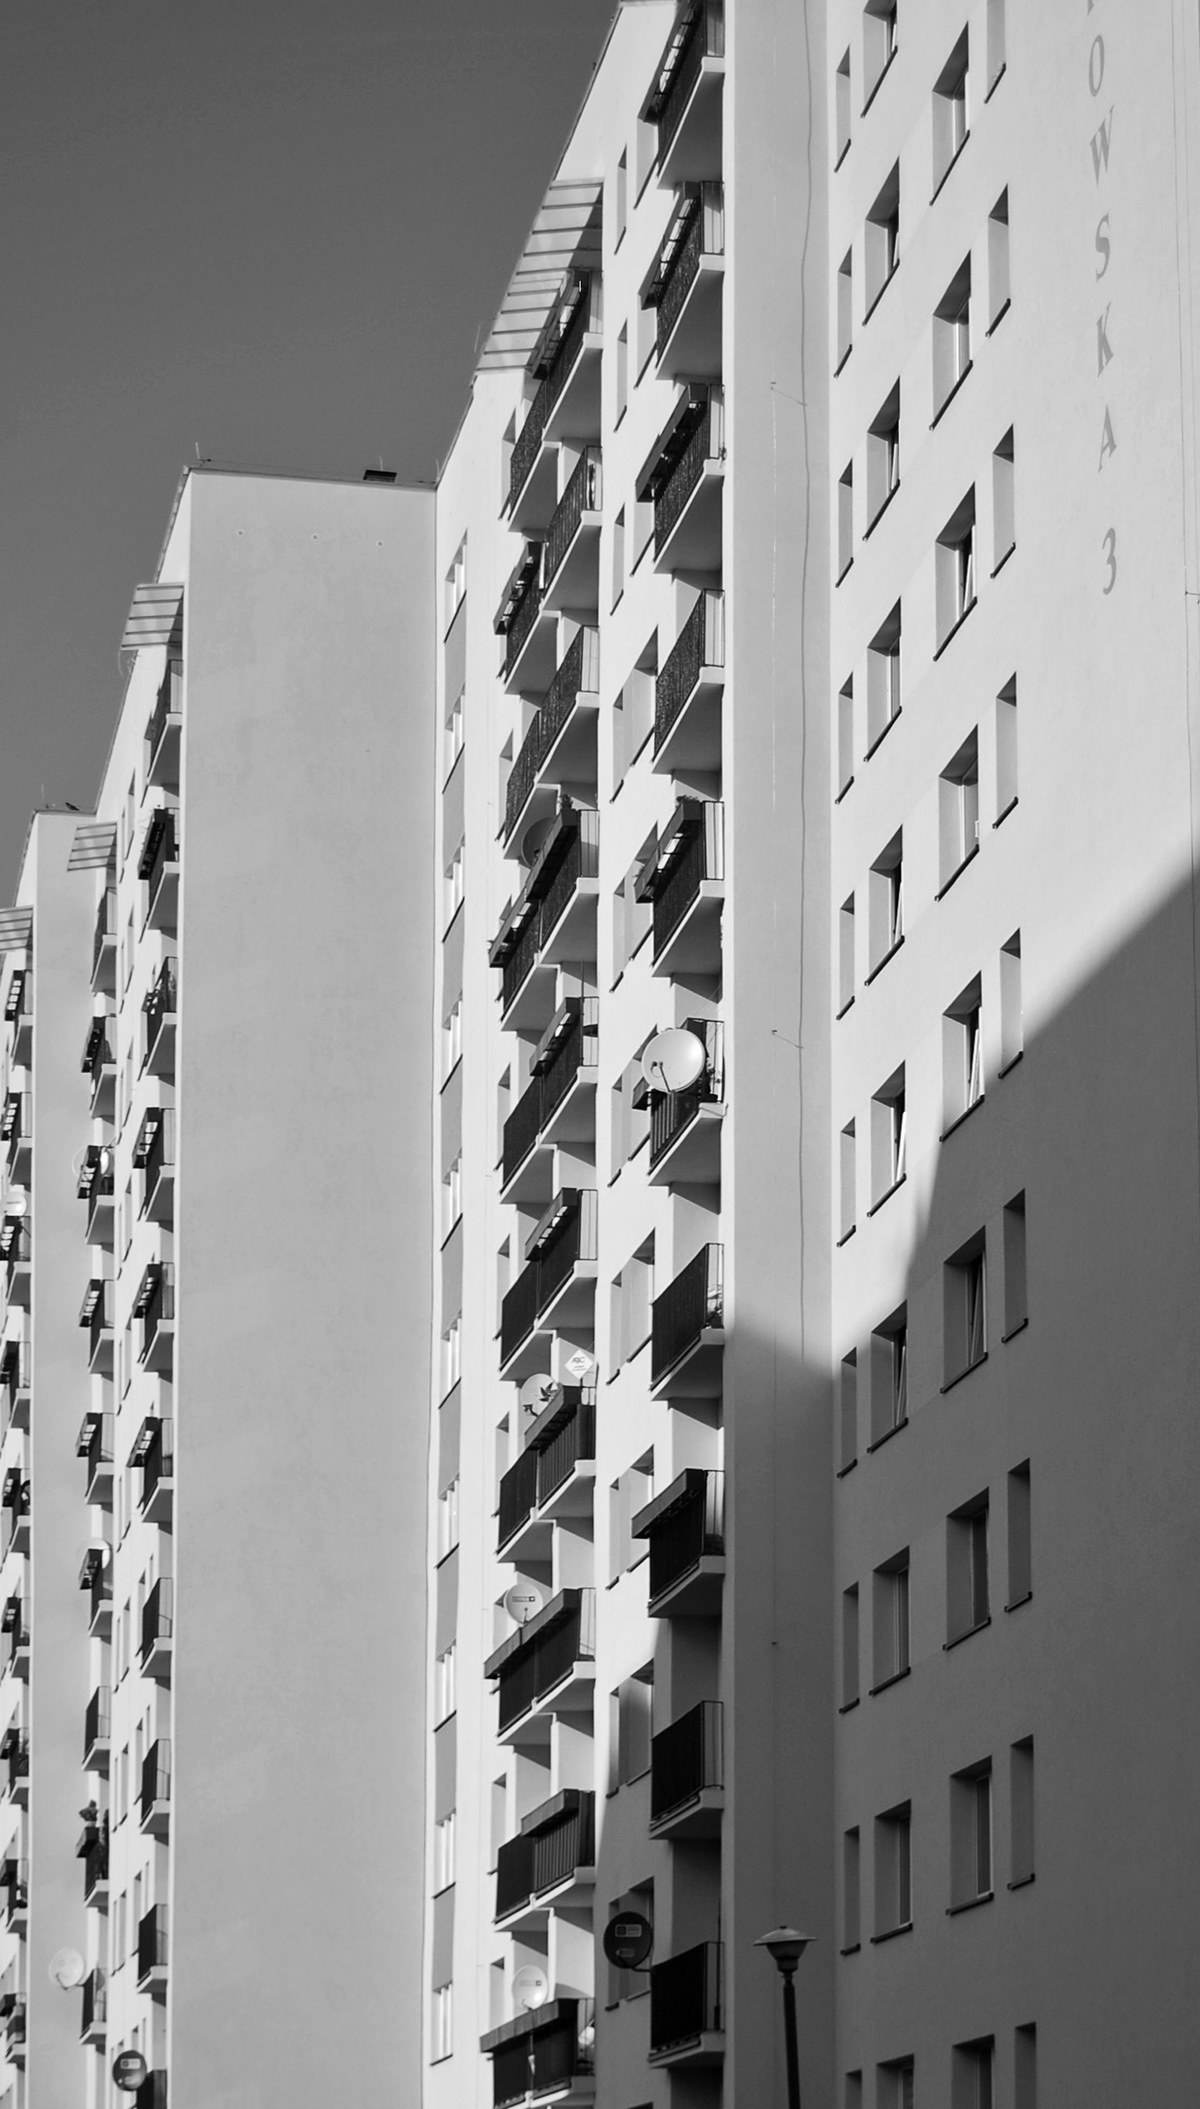 plattenbau prefabricated concrete panels block house estate black and white b&w exterior geometry Perspective architectureporn